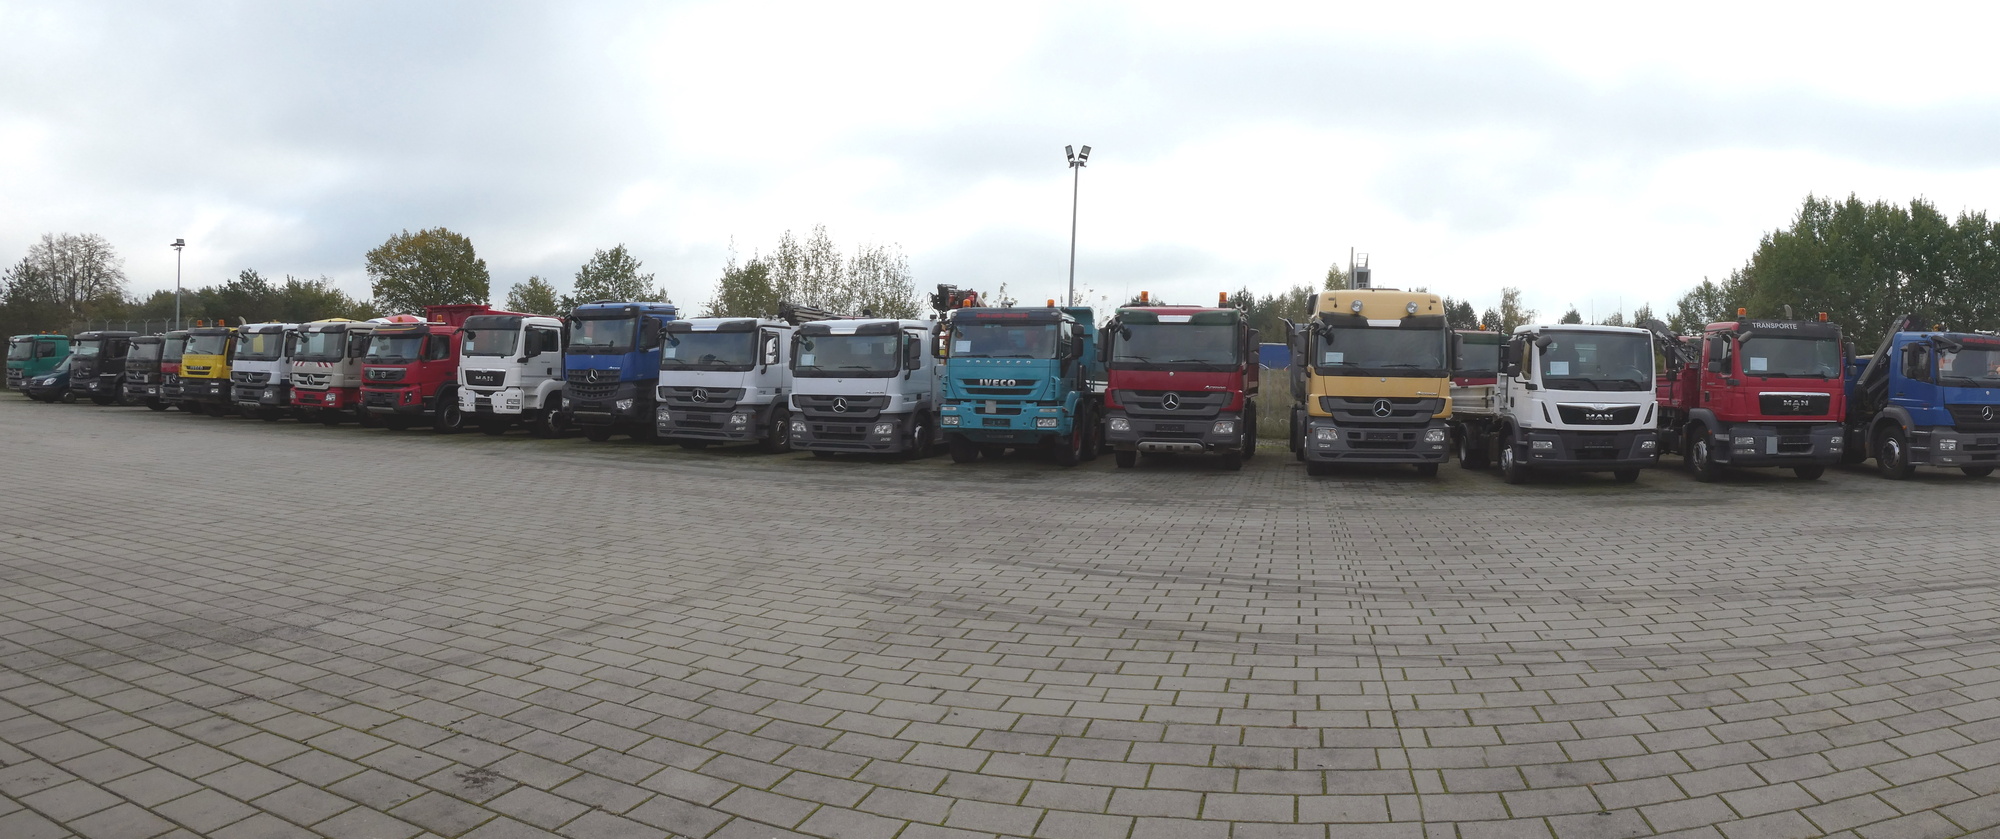 Henze Truck GmbH - כלי רכב למכירה undefined: תמונה 1